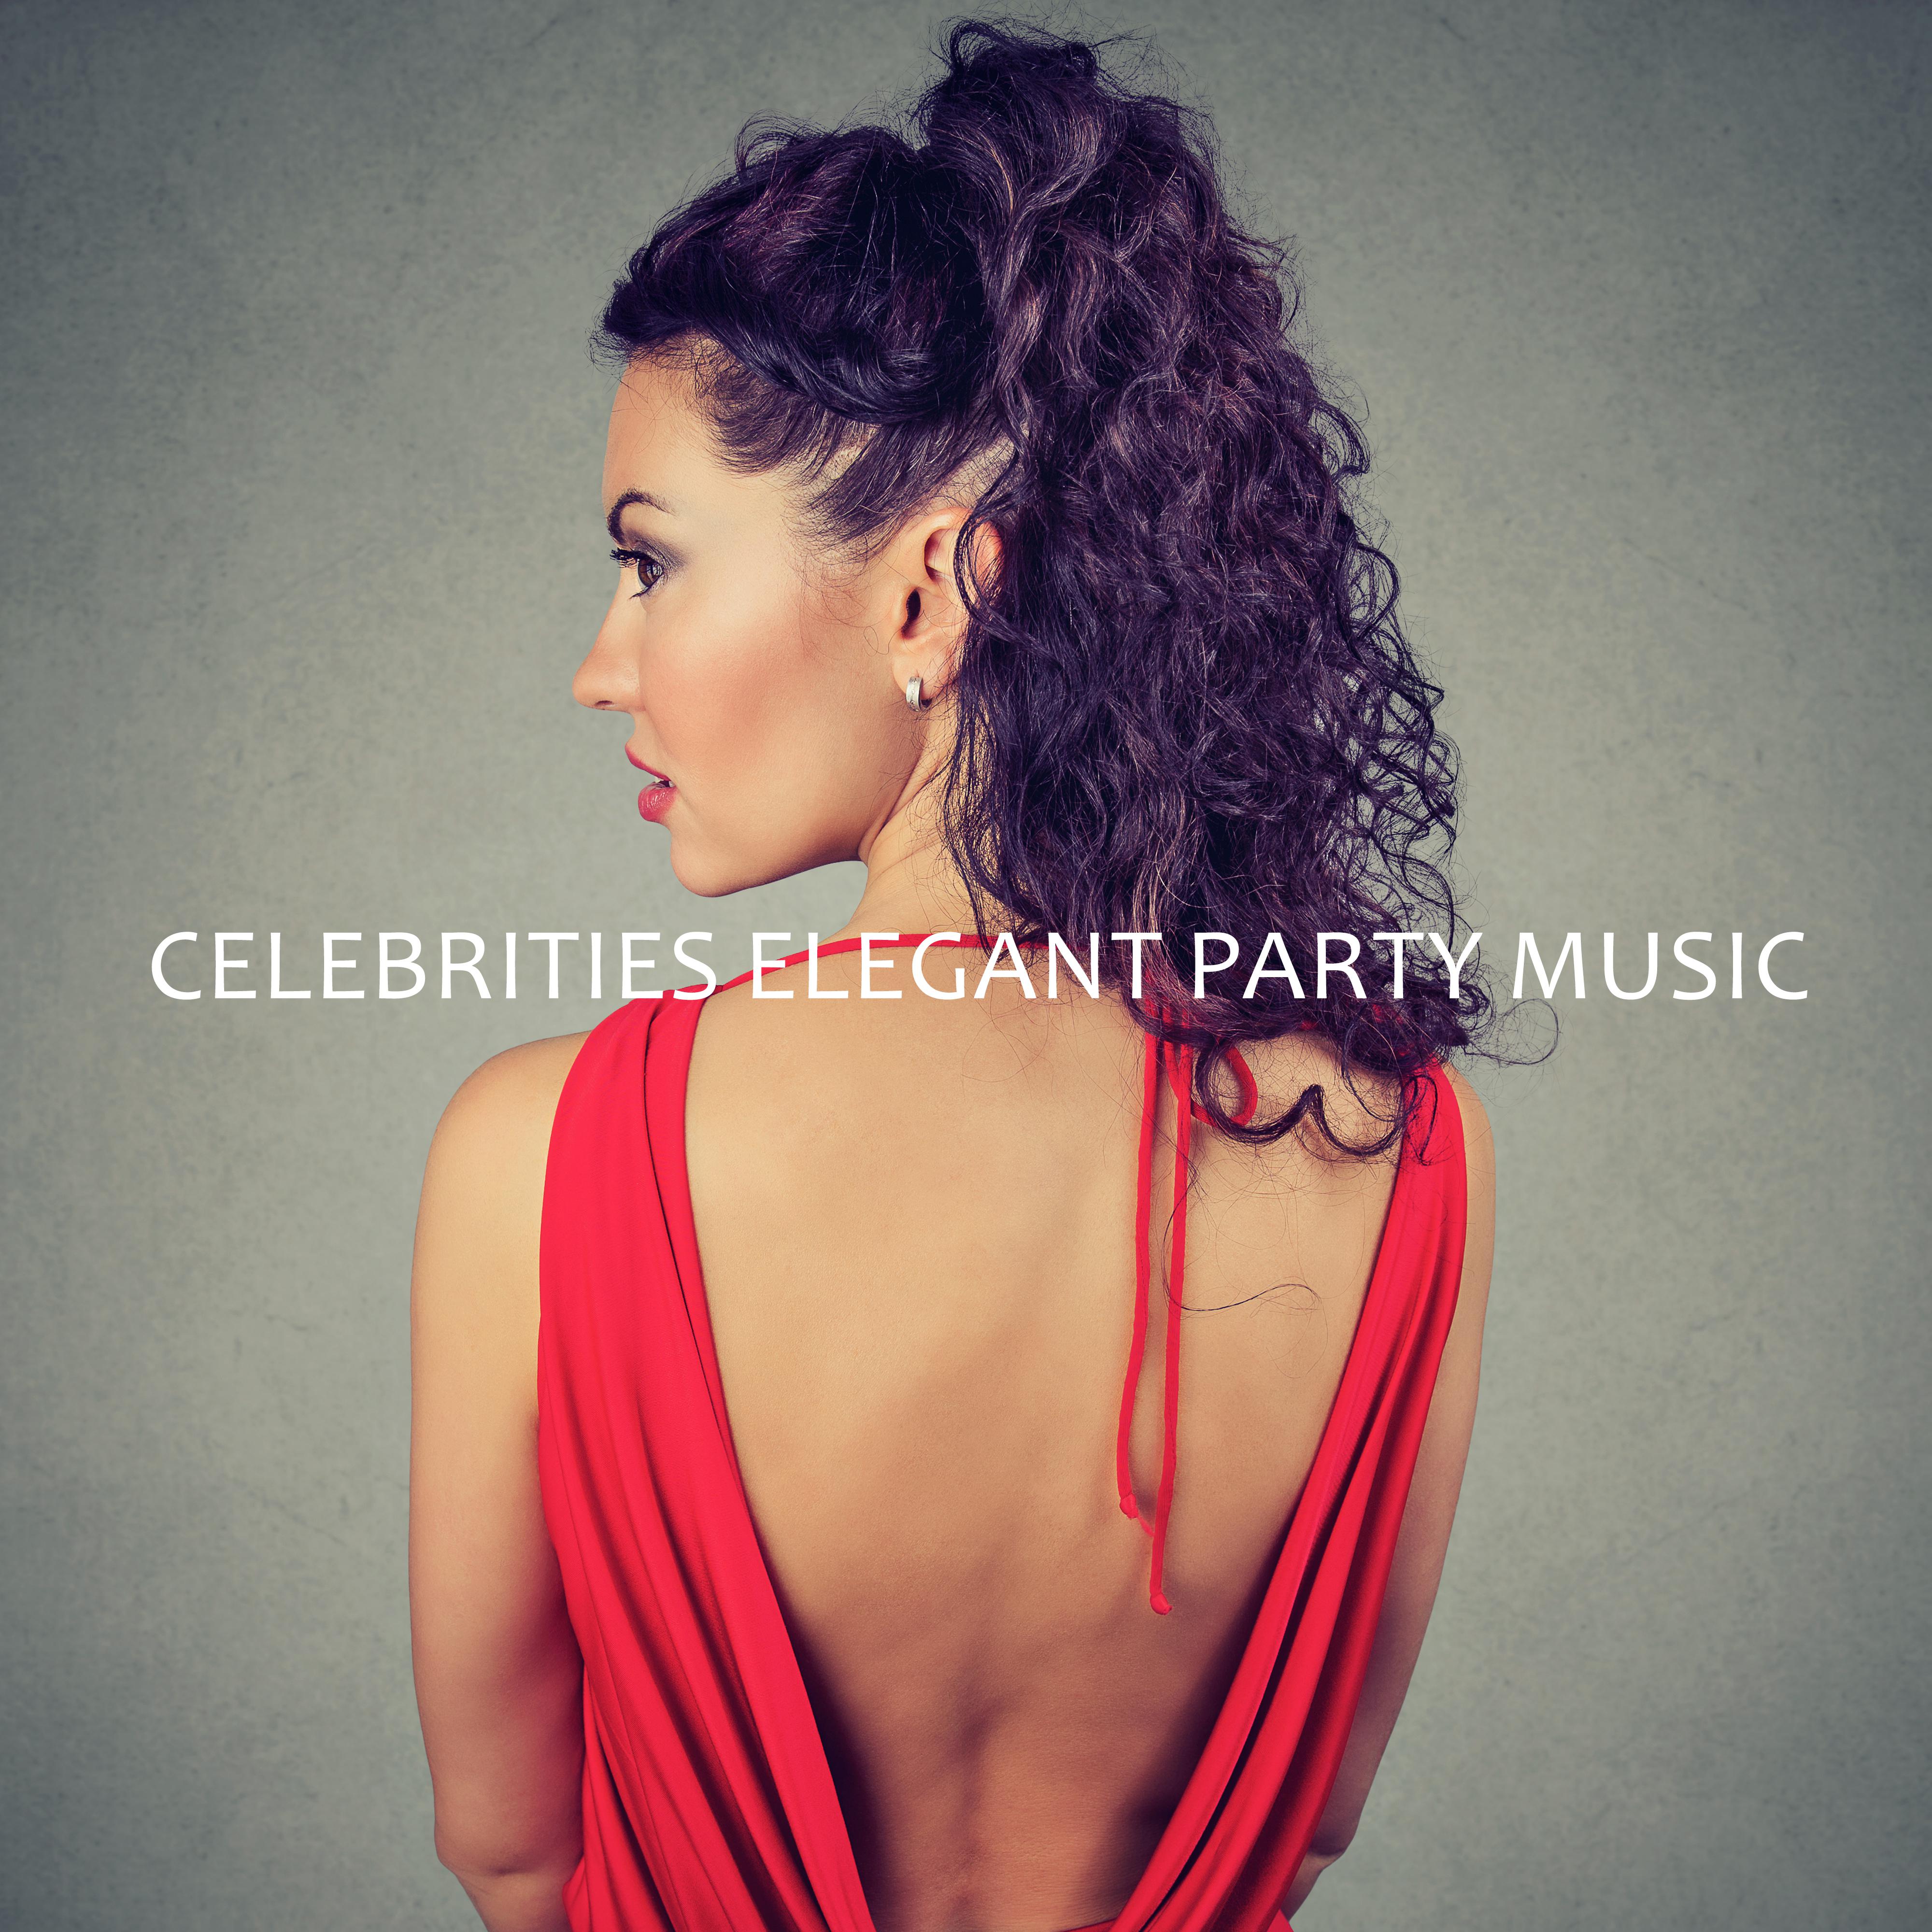 Celebrities Elegant Party Music: Chillout Electronc Beats 2019 Compilation